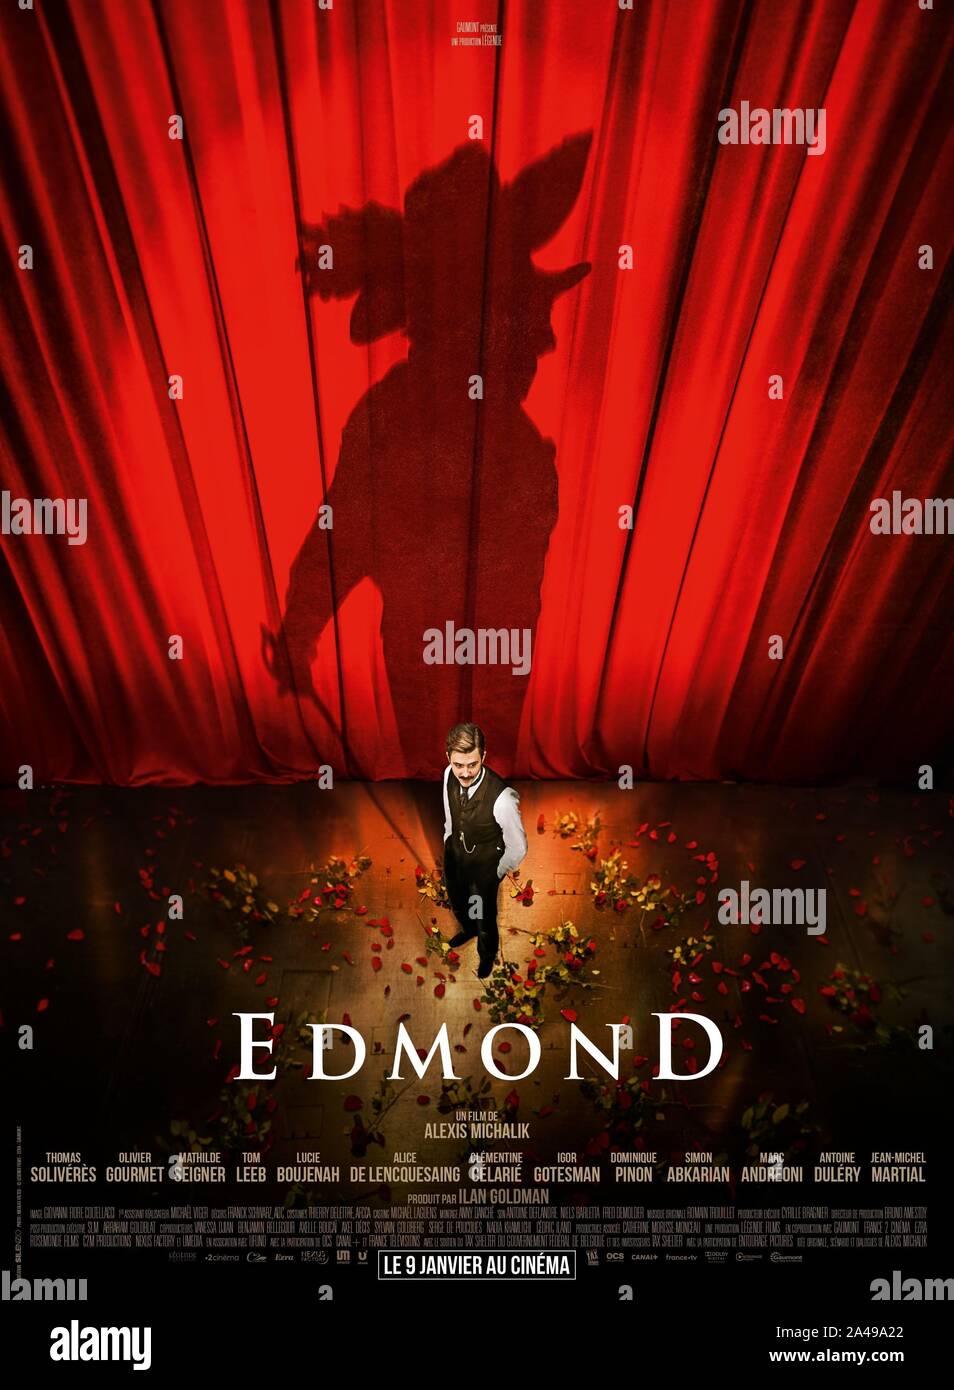 EDMOND (2018), directed by ALEXIS MICHALIK. Credit: LEGENDE FILMS / Album  Stock Photo - Alamy